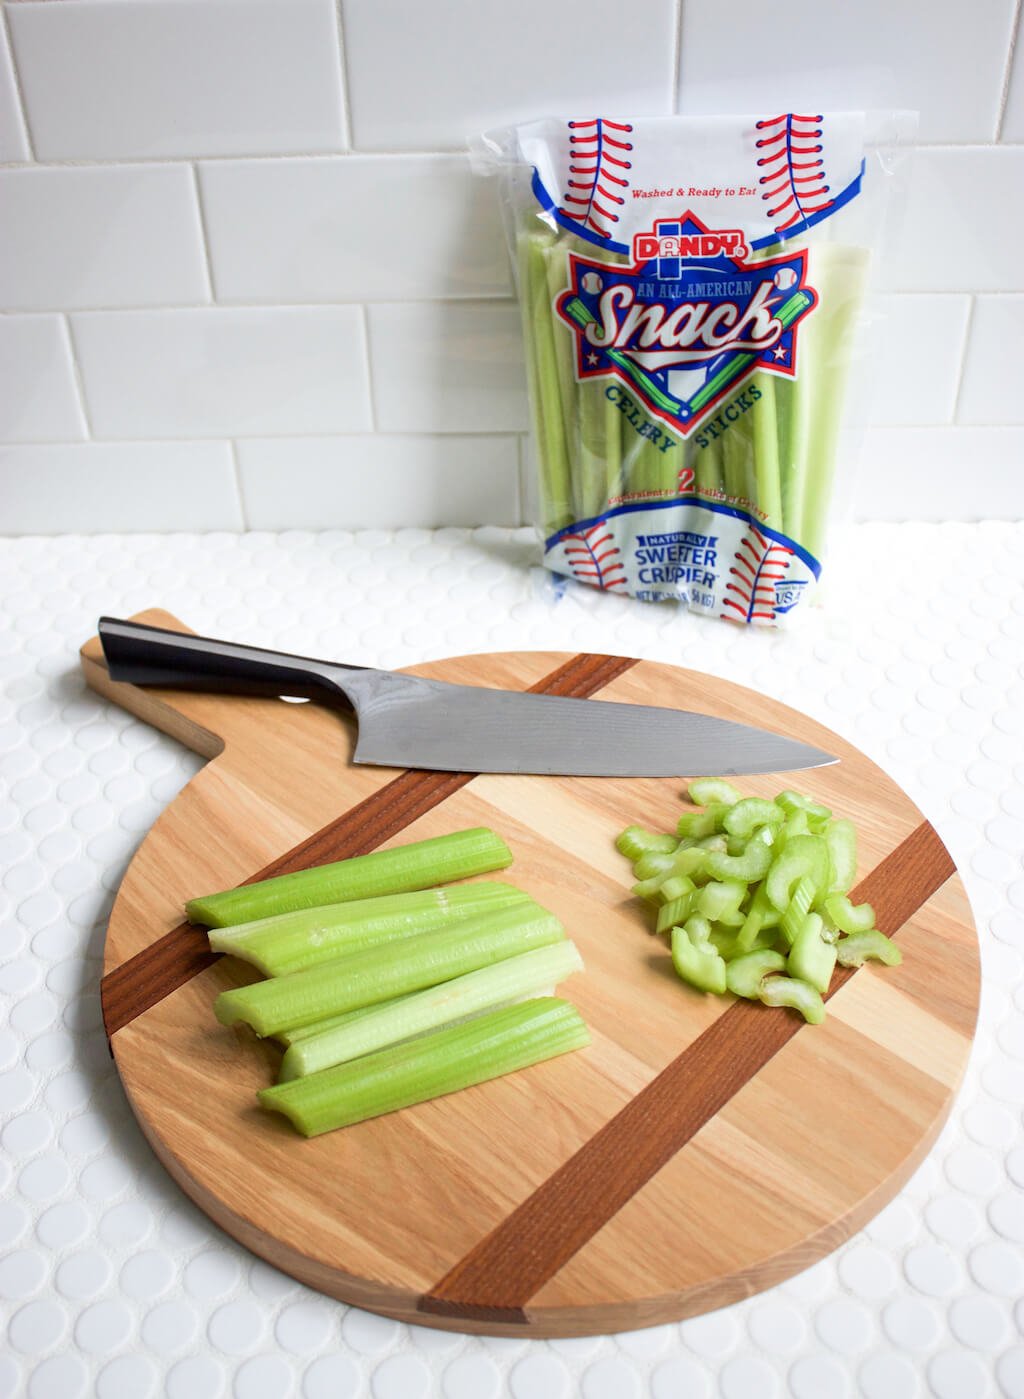 Dandy® Celery Sticks